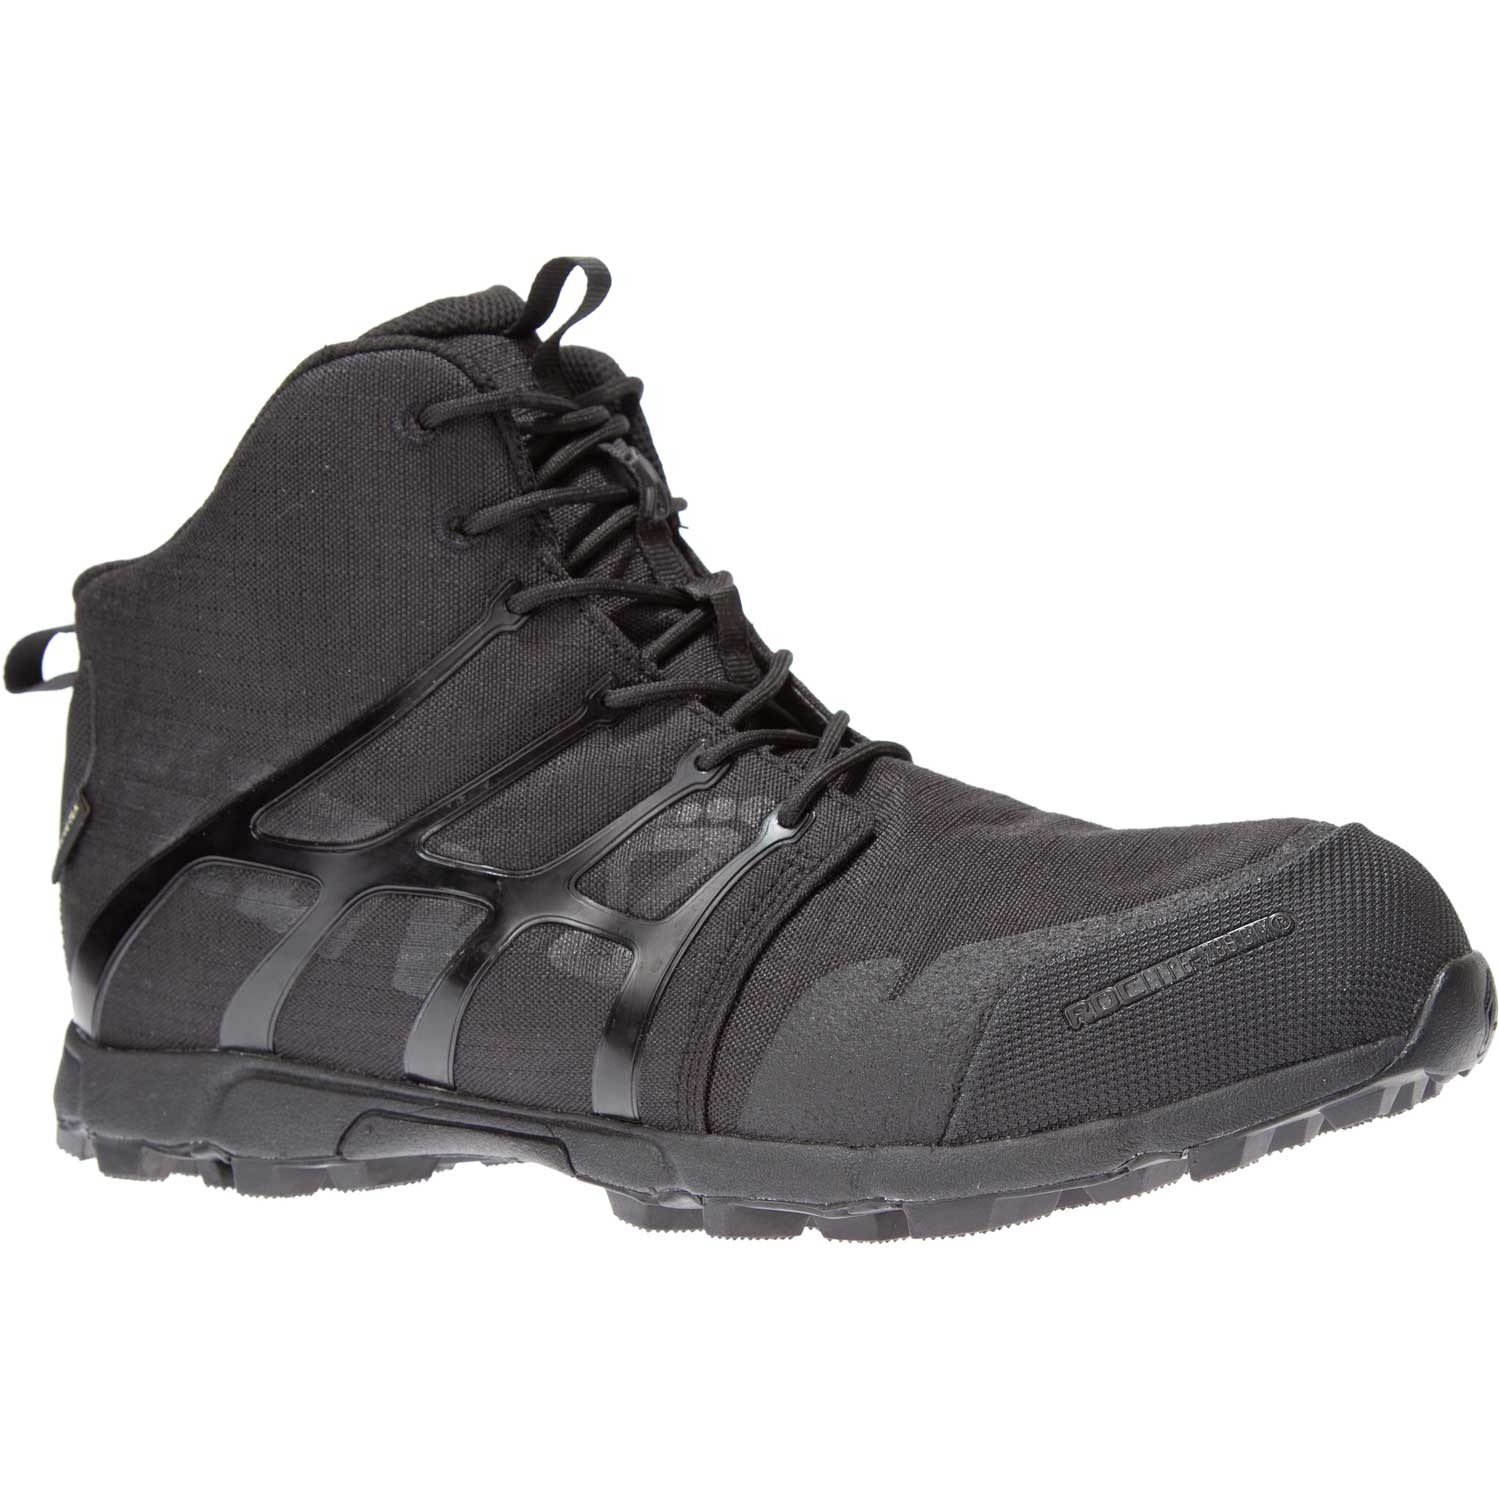 Inov-8 Roclite G 286 Hiking Boots - Women's - Black